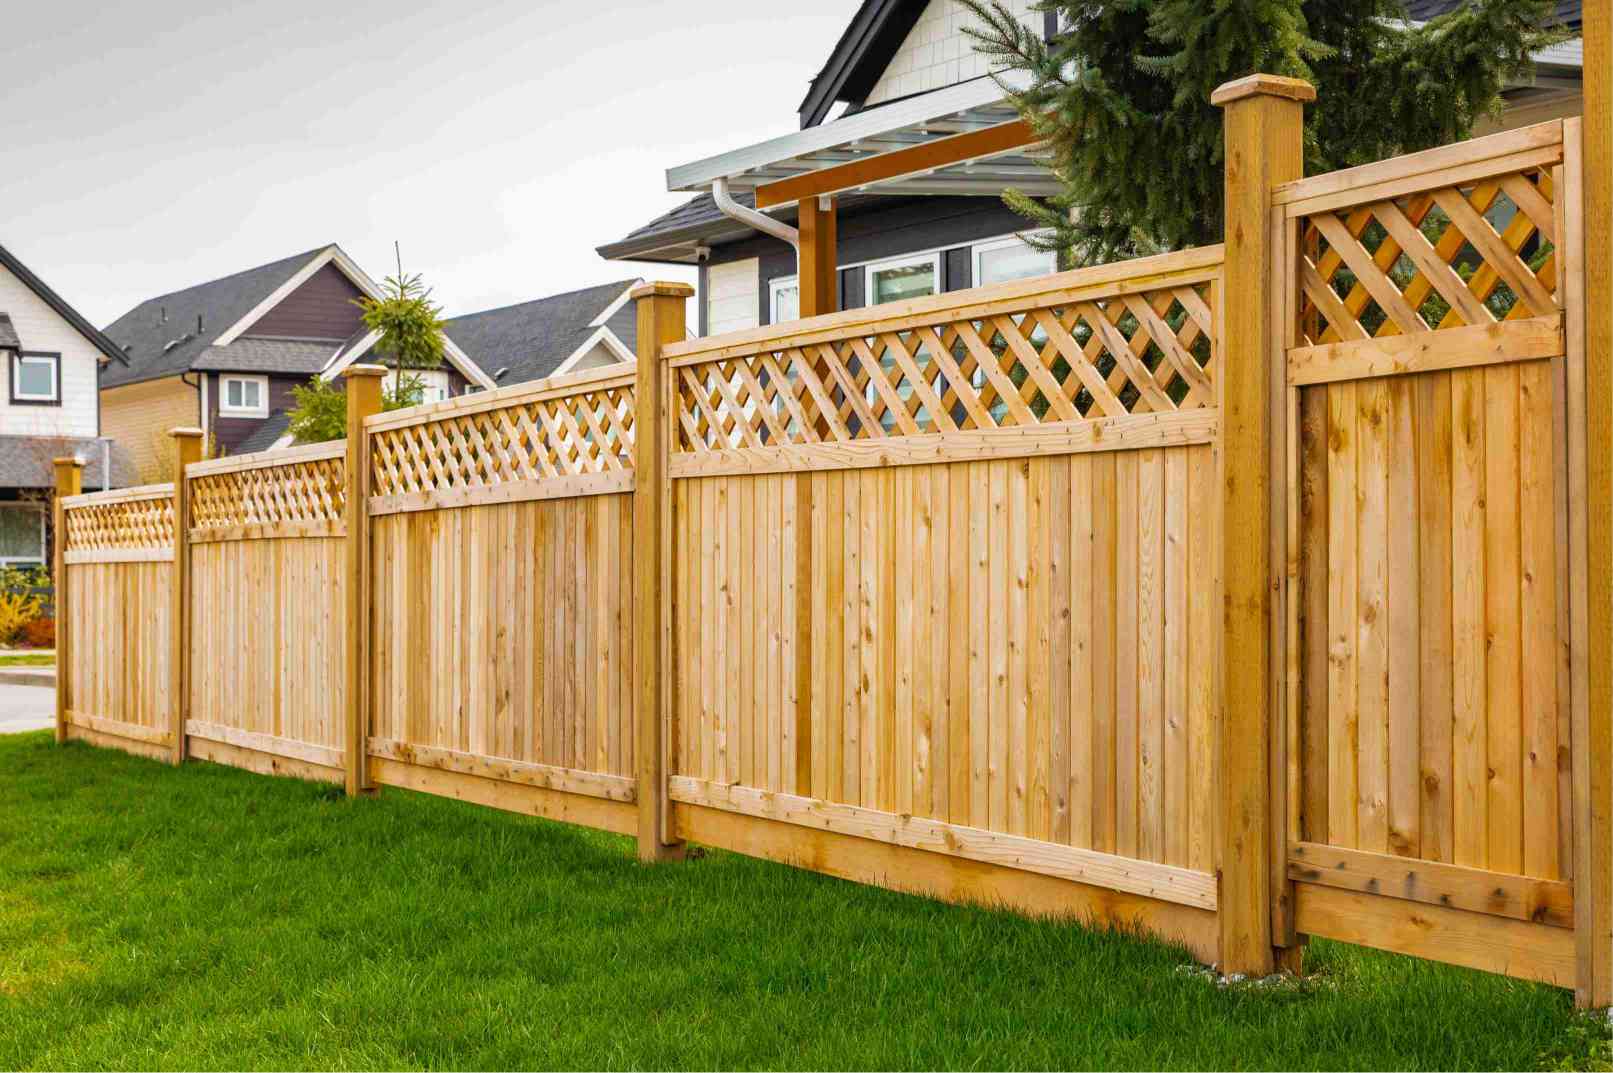 Wood fence with trellis